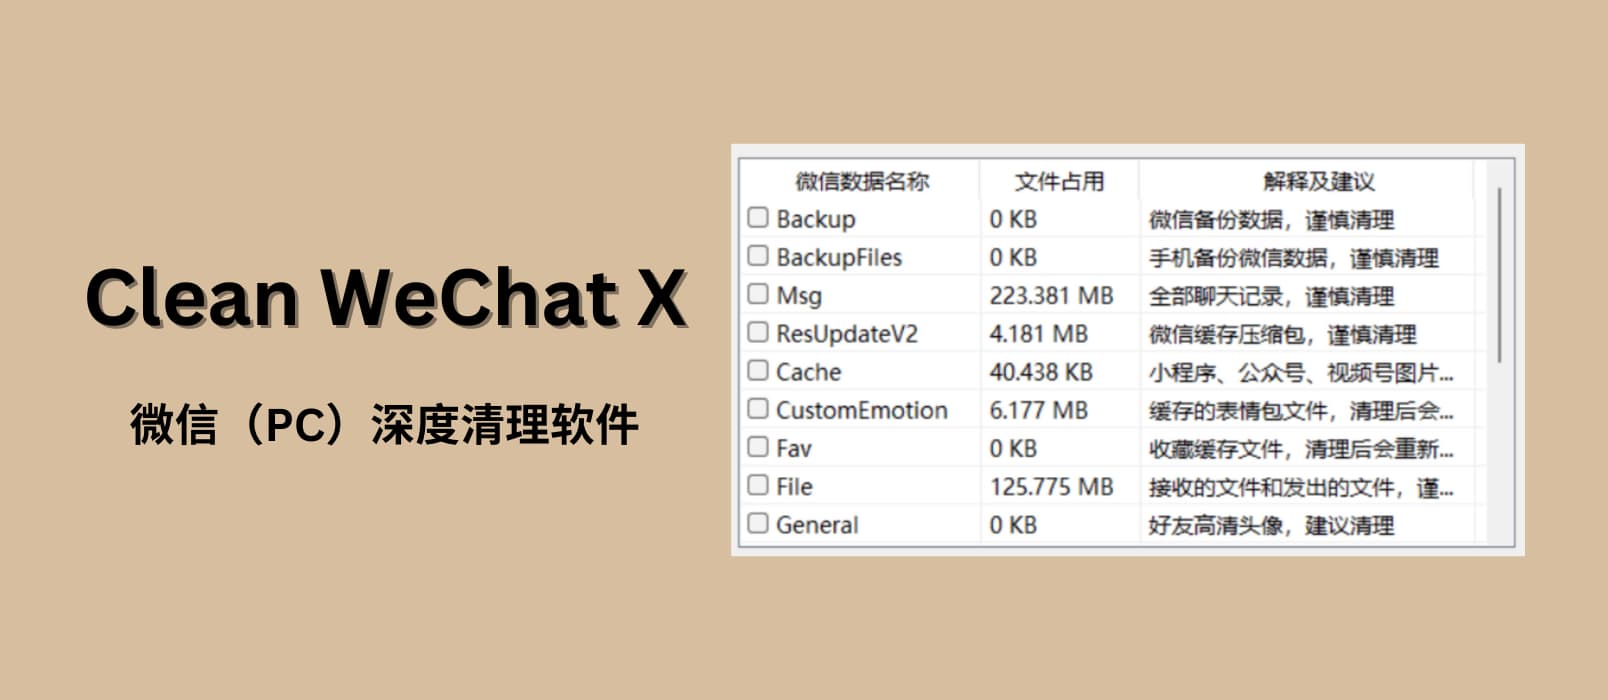 Clean WeChat X - 微信（PC）深度清理软件 16